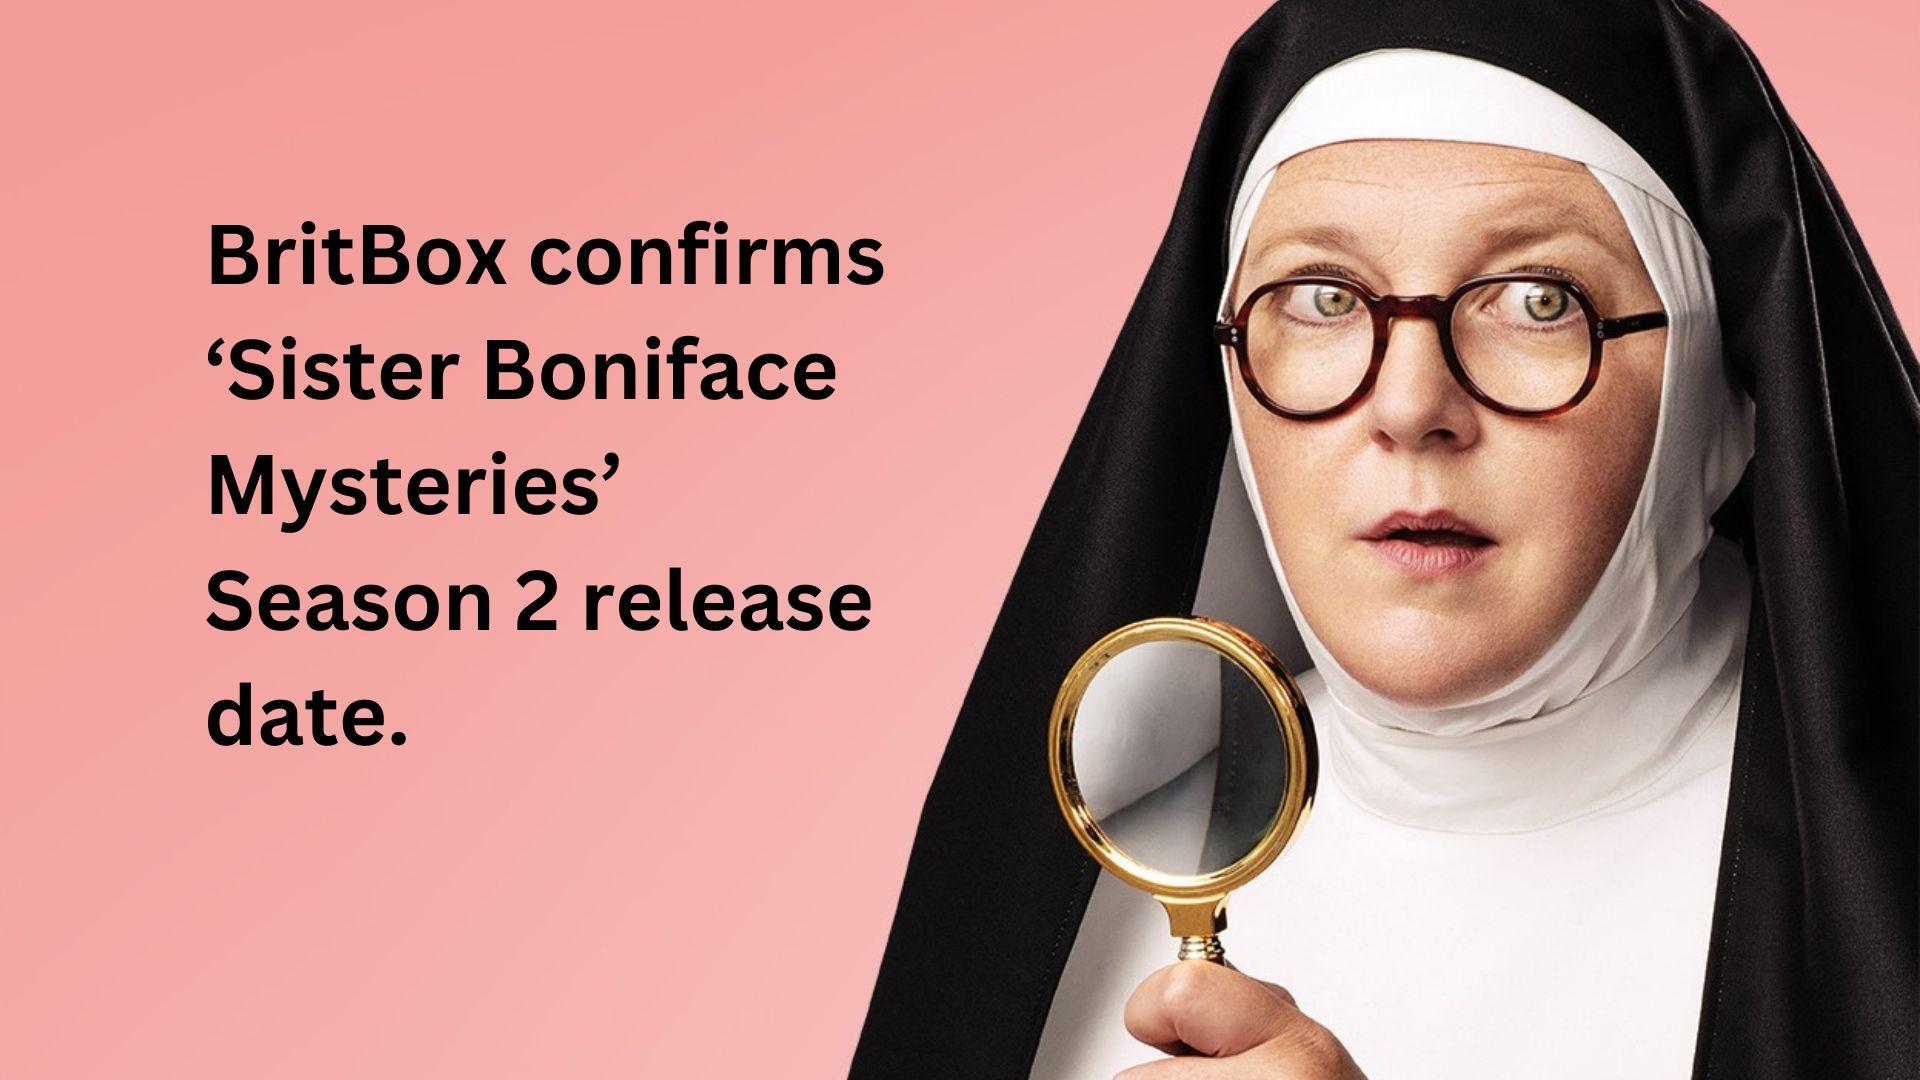 BritBox confirms ‘Sister Boniface Mysteries’ Season 2 release date